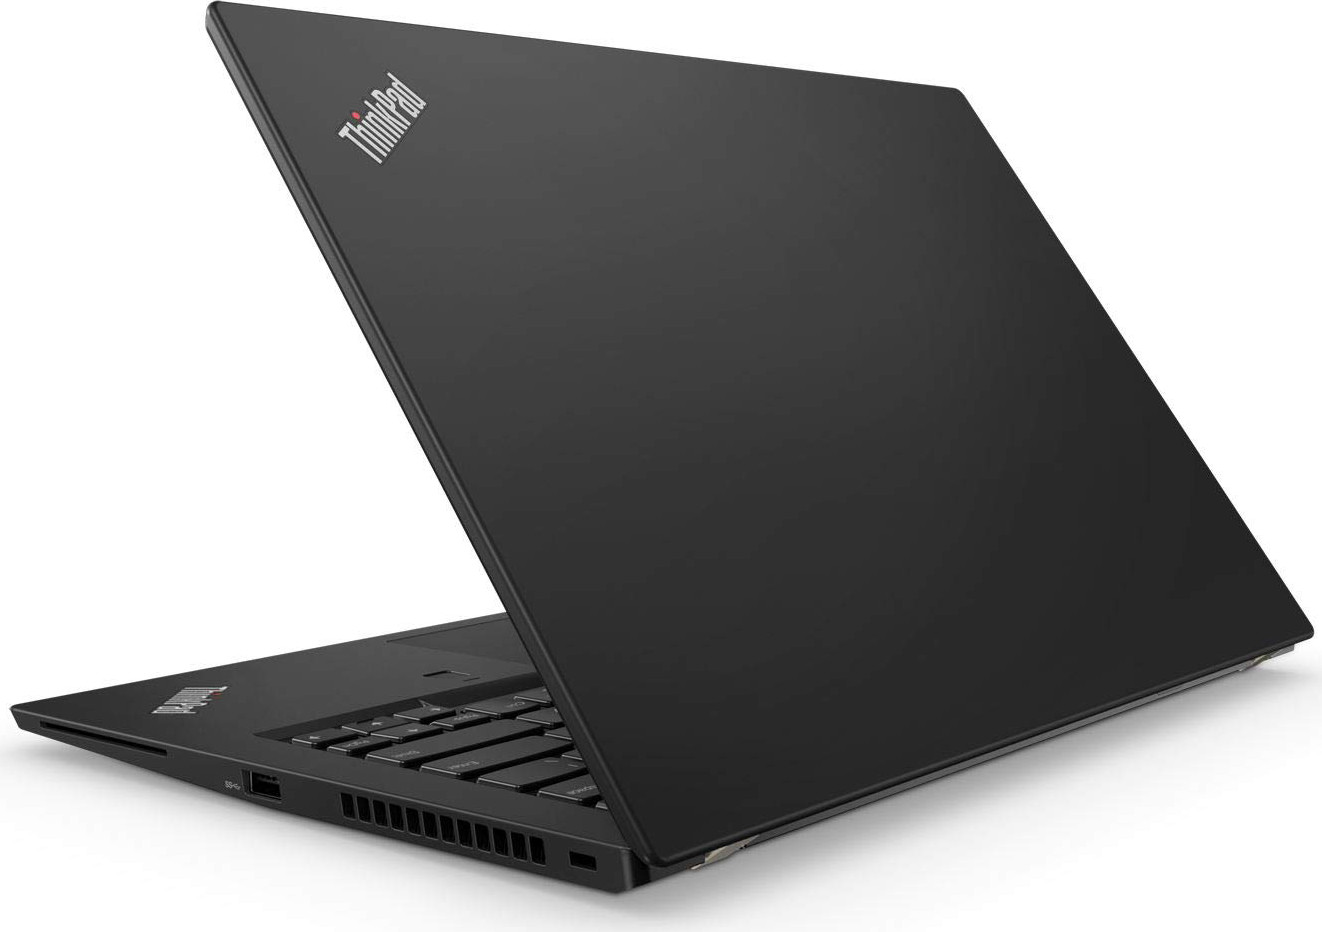 2019 Lenovo Thinkpad T480s 14" IPS Touchscreen FHD (1920x1080) Business Laptop (Intel Quad-Core i5-8250U, 8GB DDR4 RAM, 256GB SSD, UHD 620) Fingerprint, Thunderbolt 3, HDMI, RJ-45, Windows 10 Home